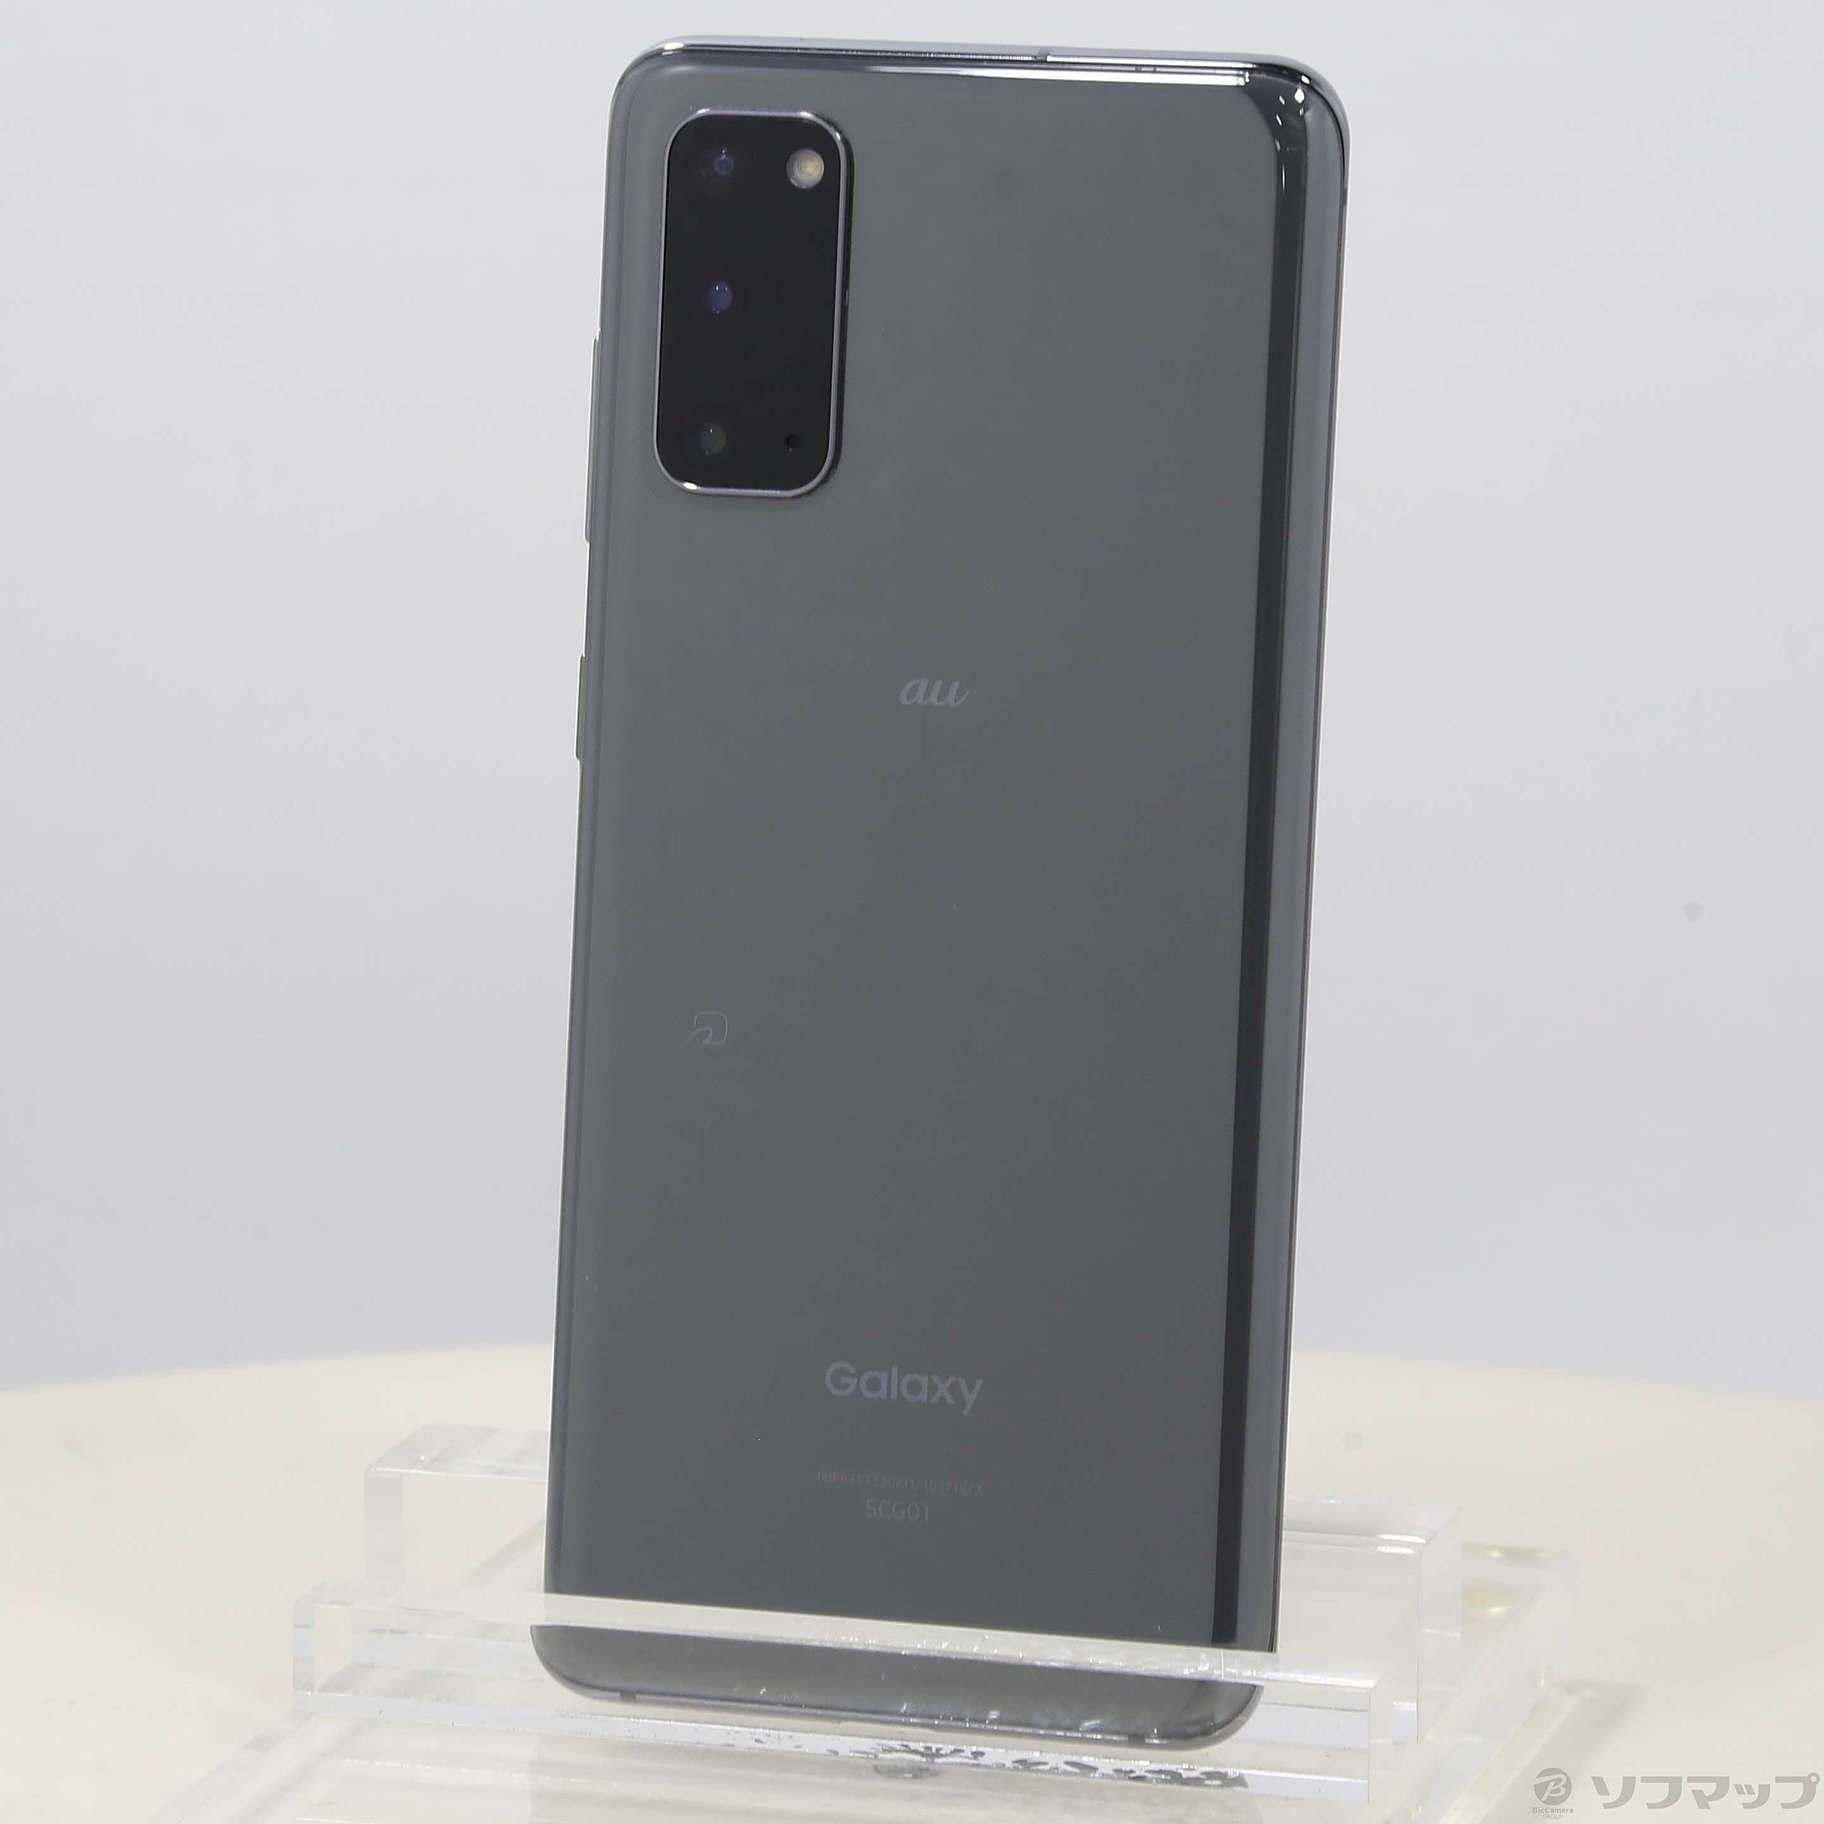 Galaxy S20 5G コスミックグレー 128GB au SIMフリースマートフォン本体 - スマートフォン本体